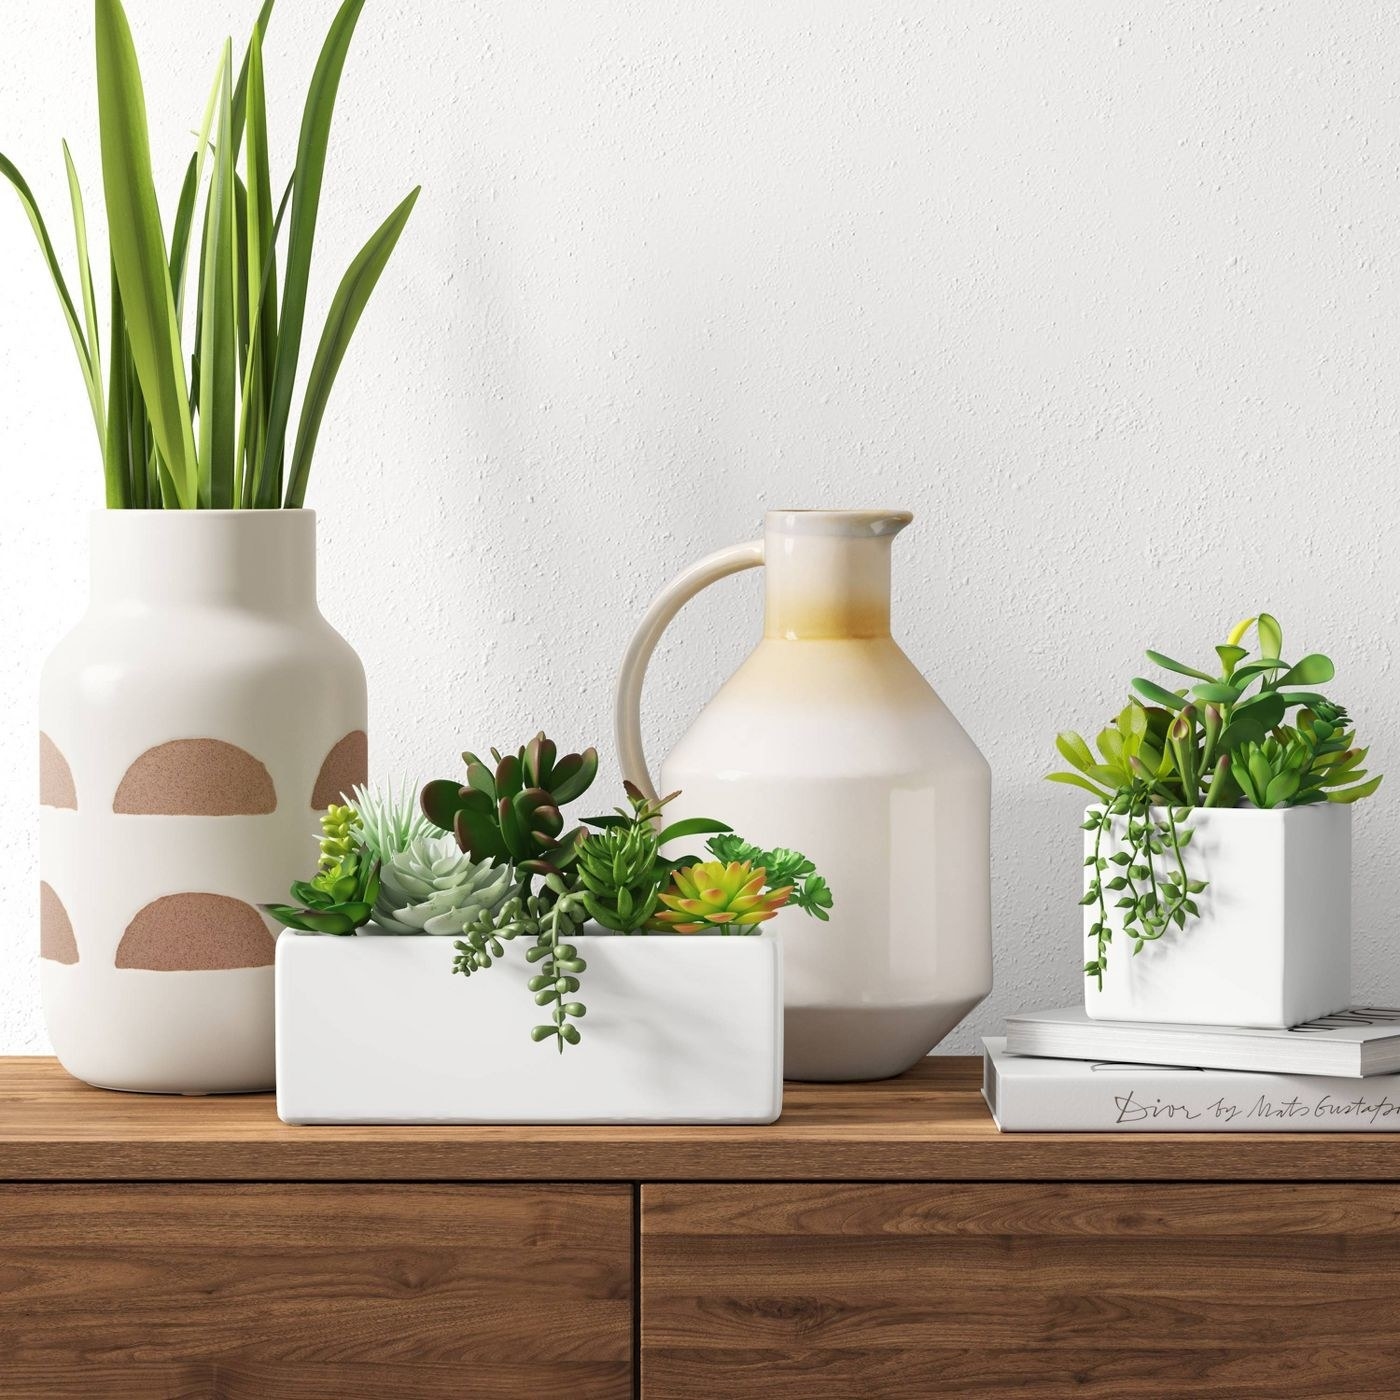 The artificial succulent plants in a pot